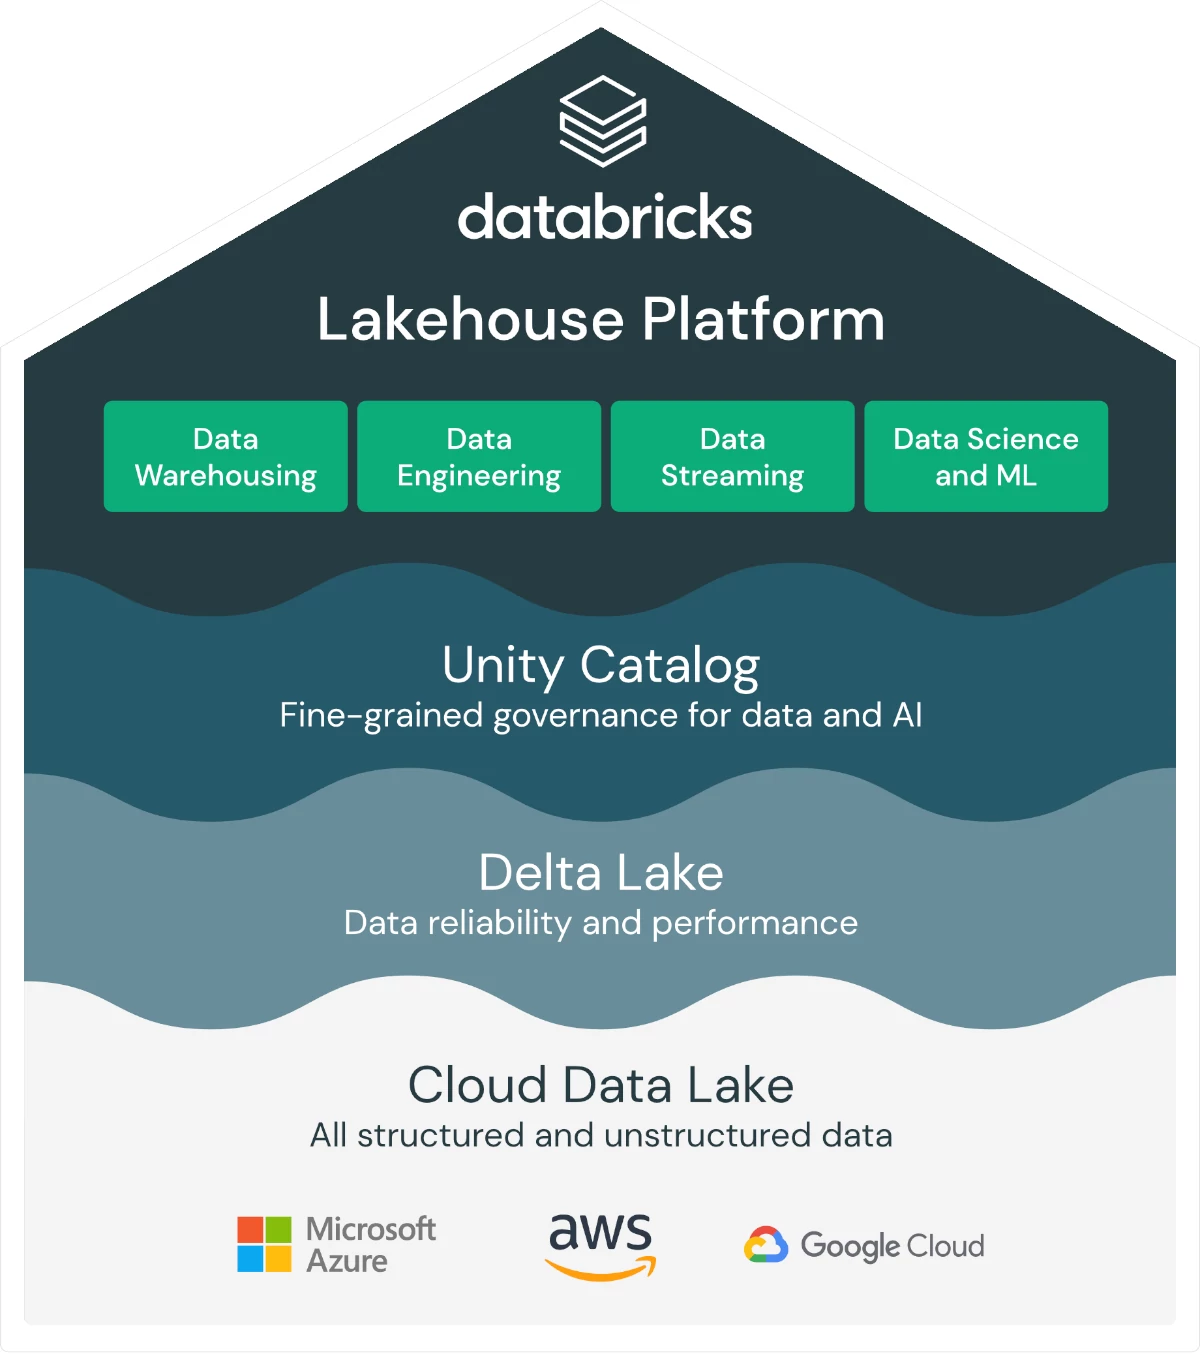 Databricks Lakehouse